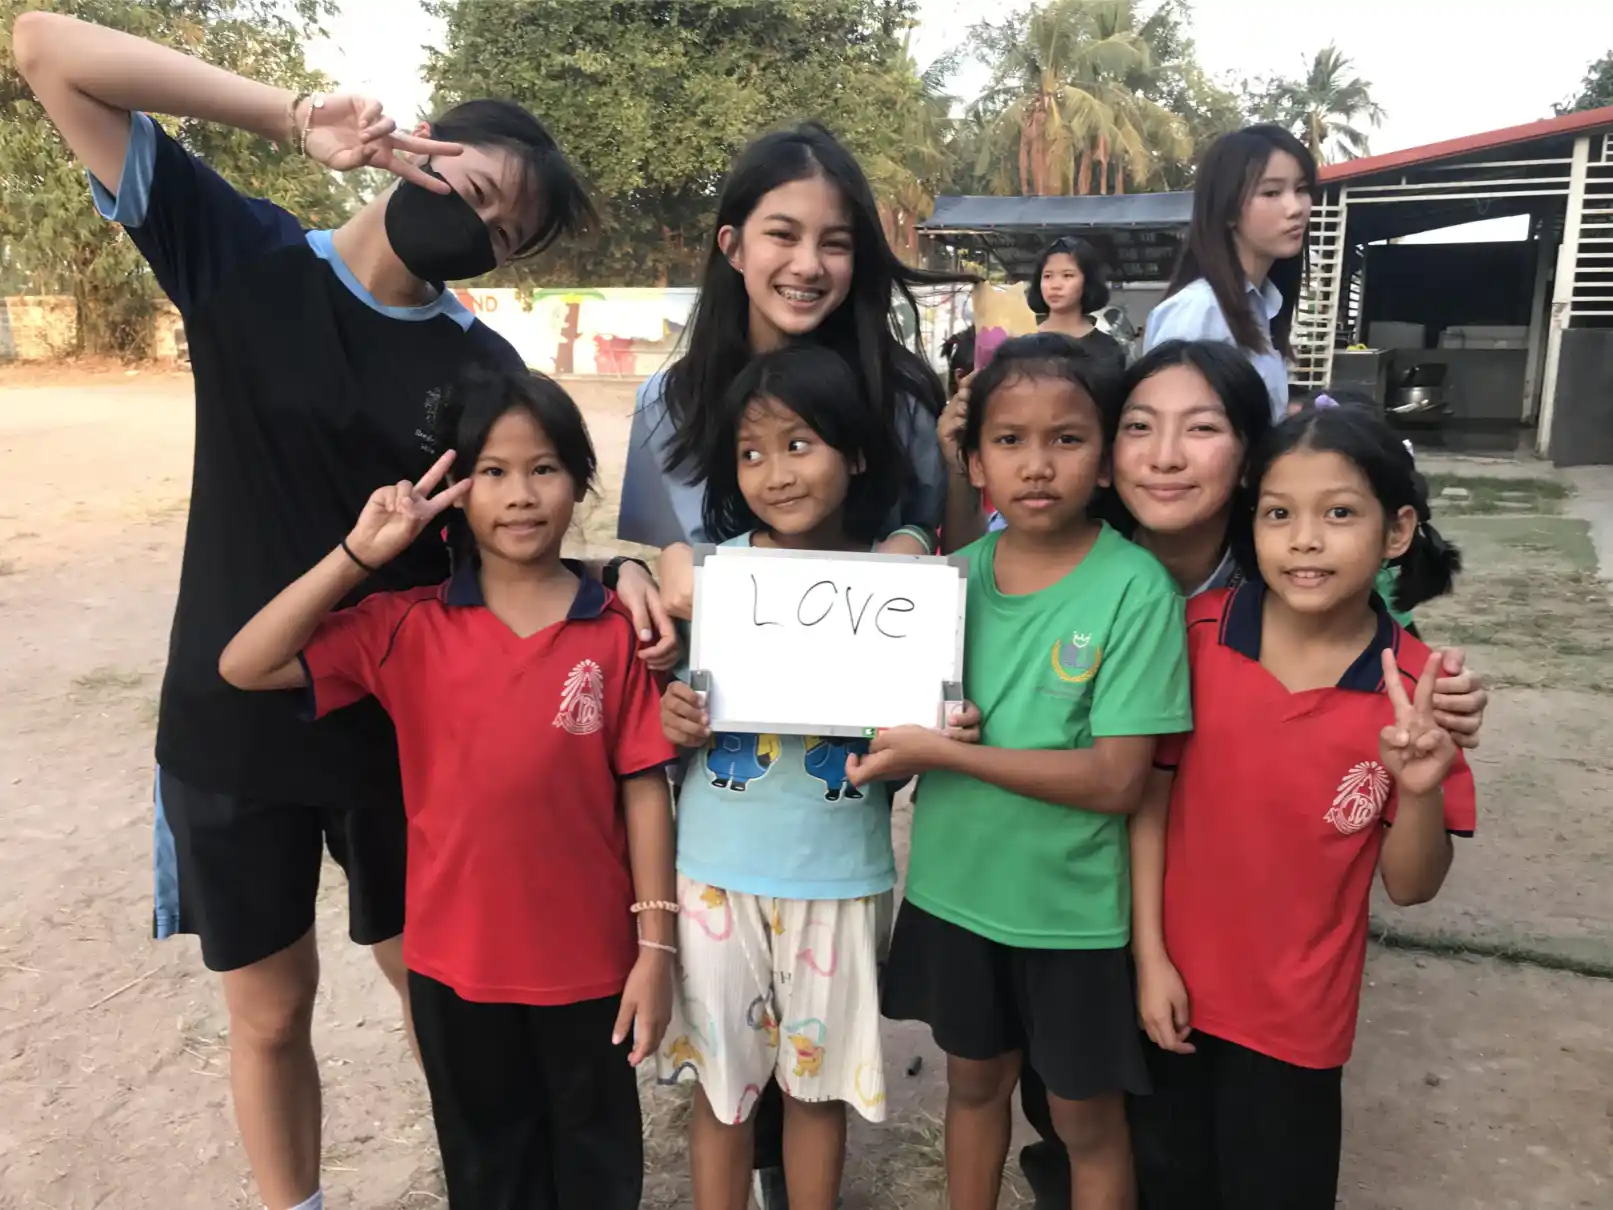 Community Initiative - Rugby School Thailand - Visiting Orphans Community Initiative - Rugby School Thailand - Visiting Orphans How to Cultivate Compassionate Leaders